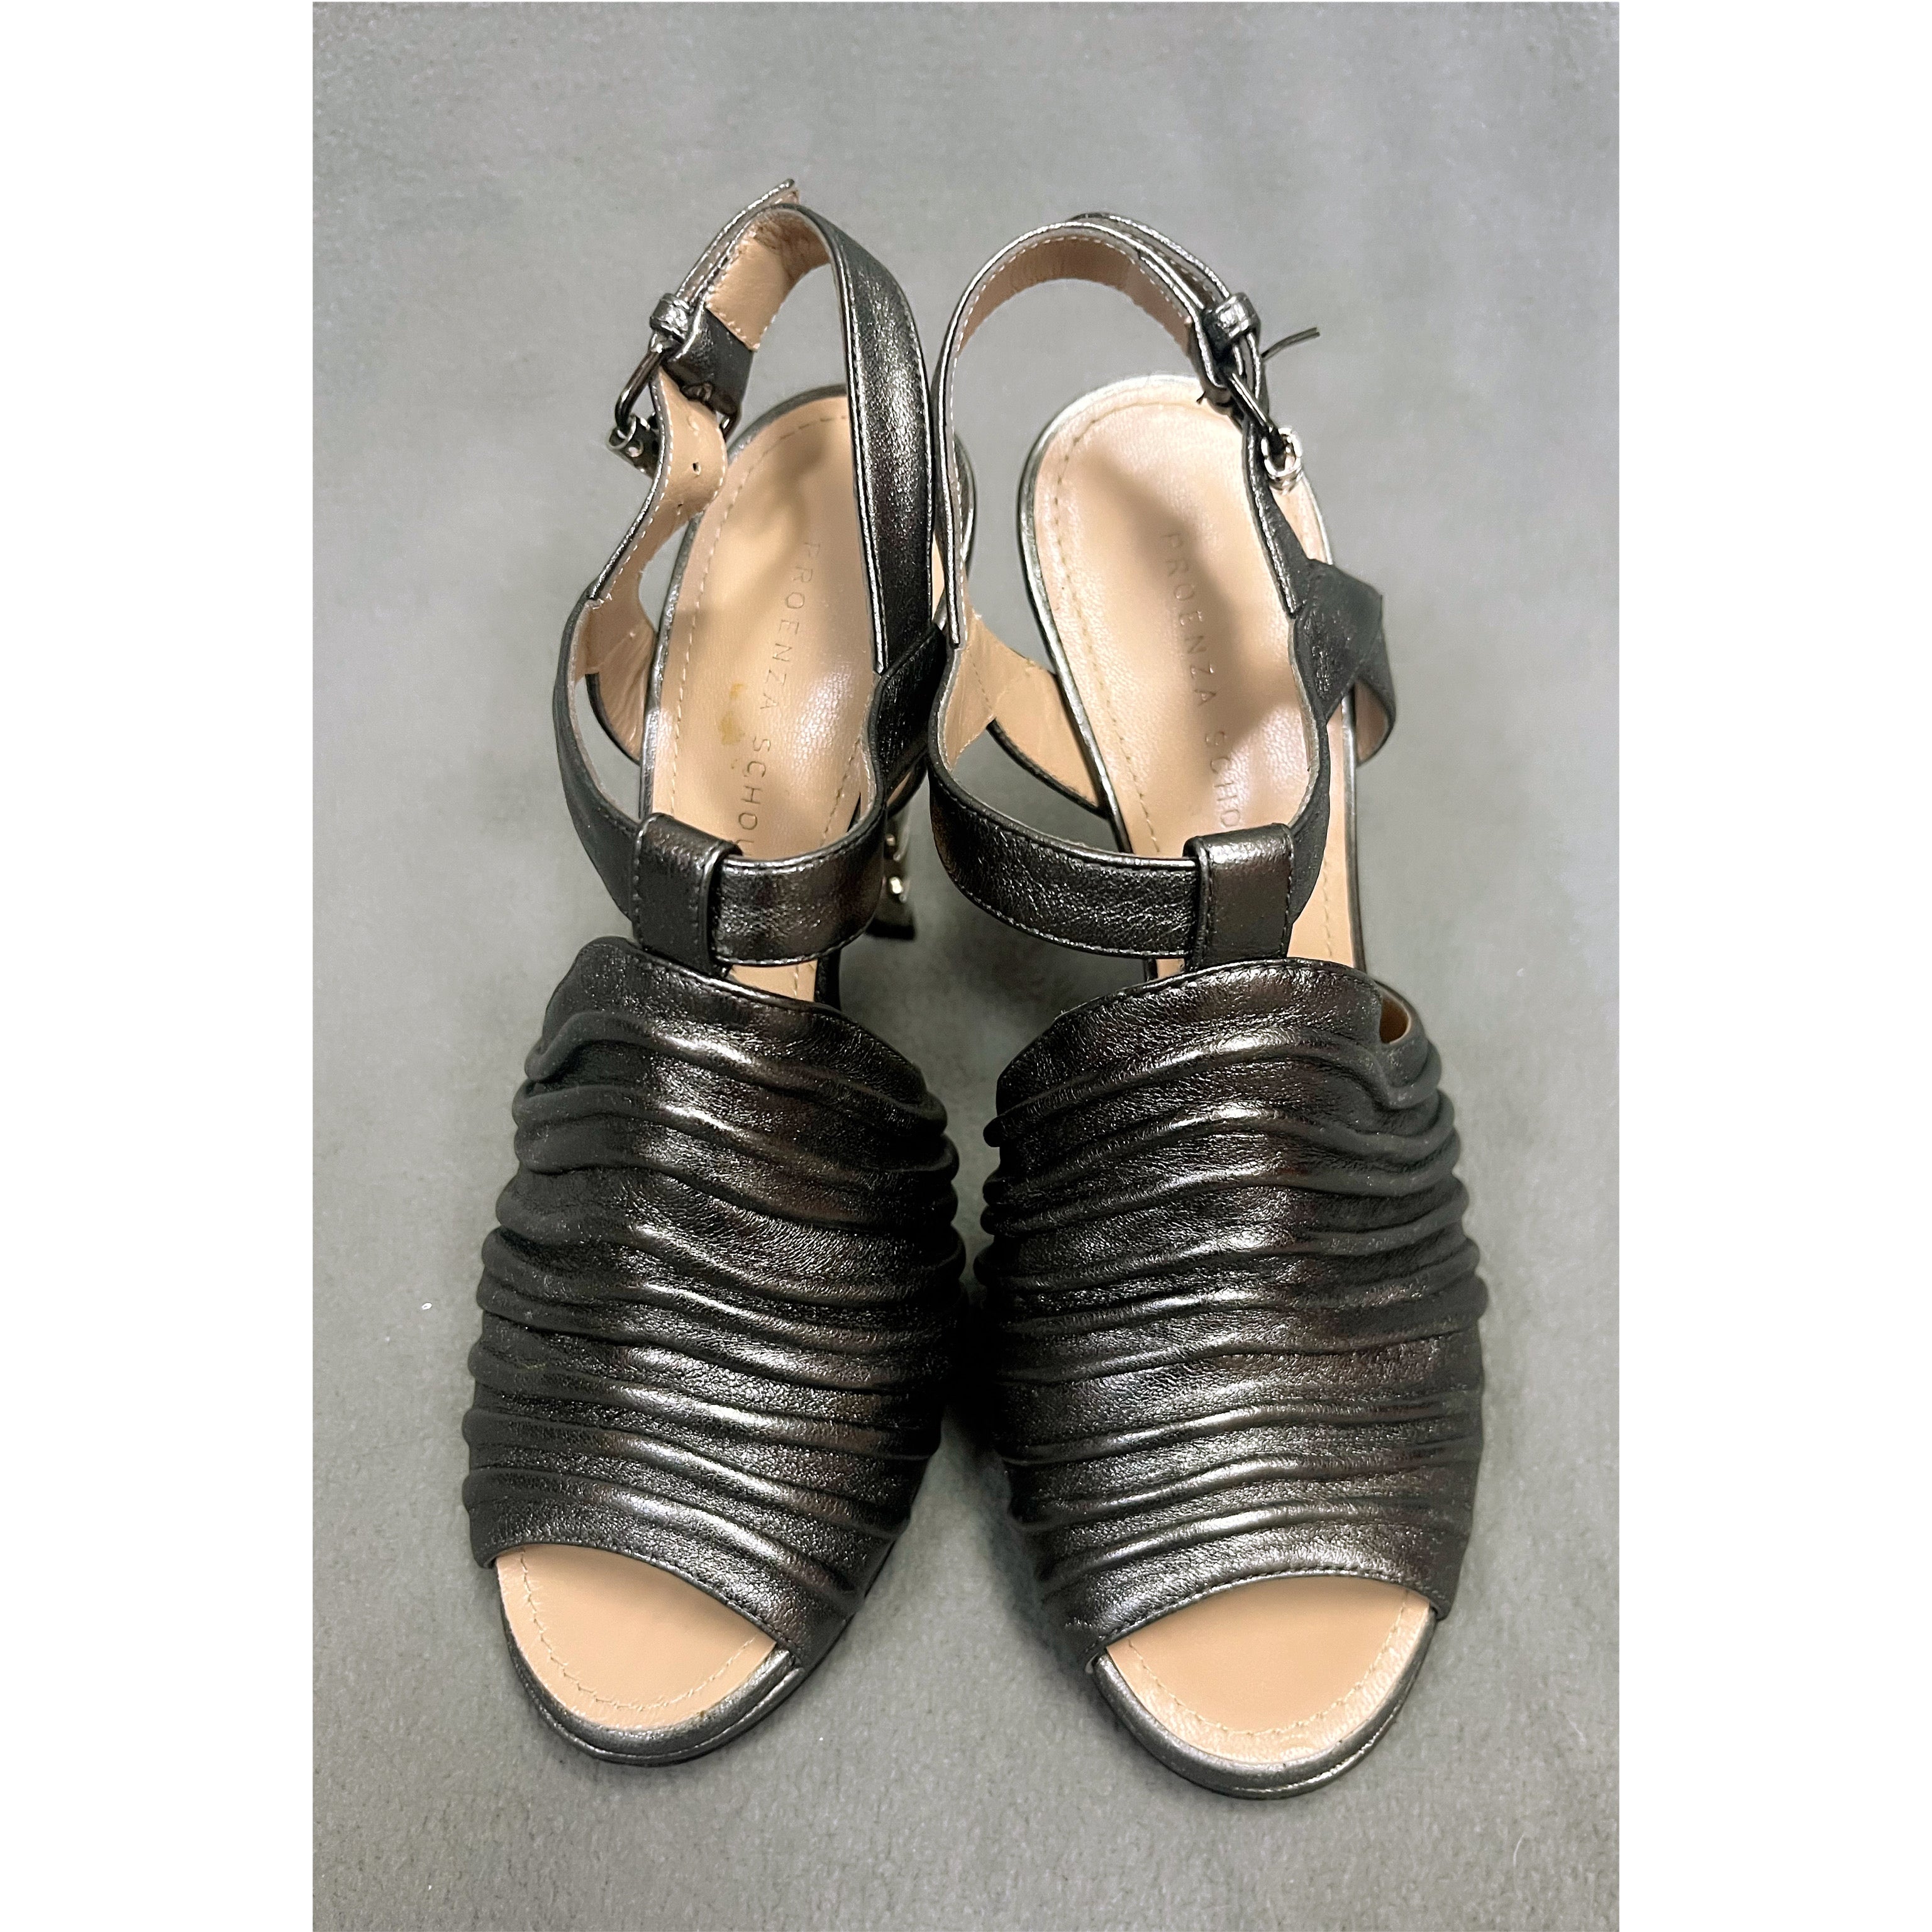 Proenza Schouler pewter shoes, size 6.5